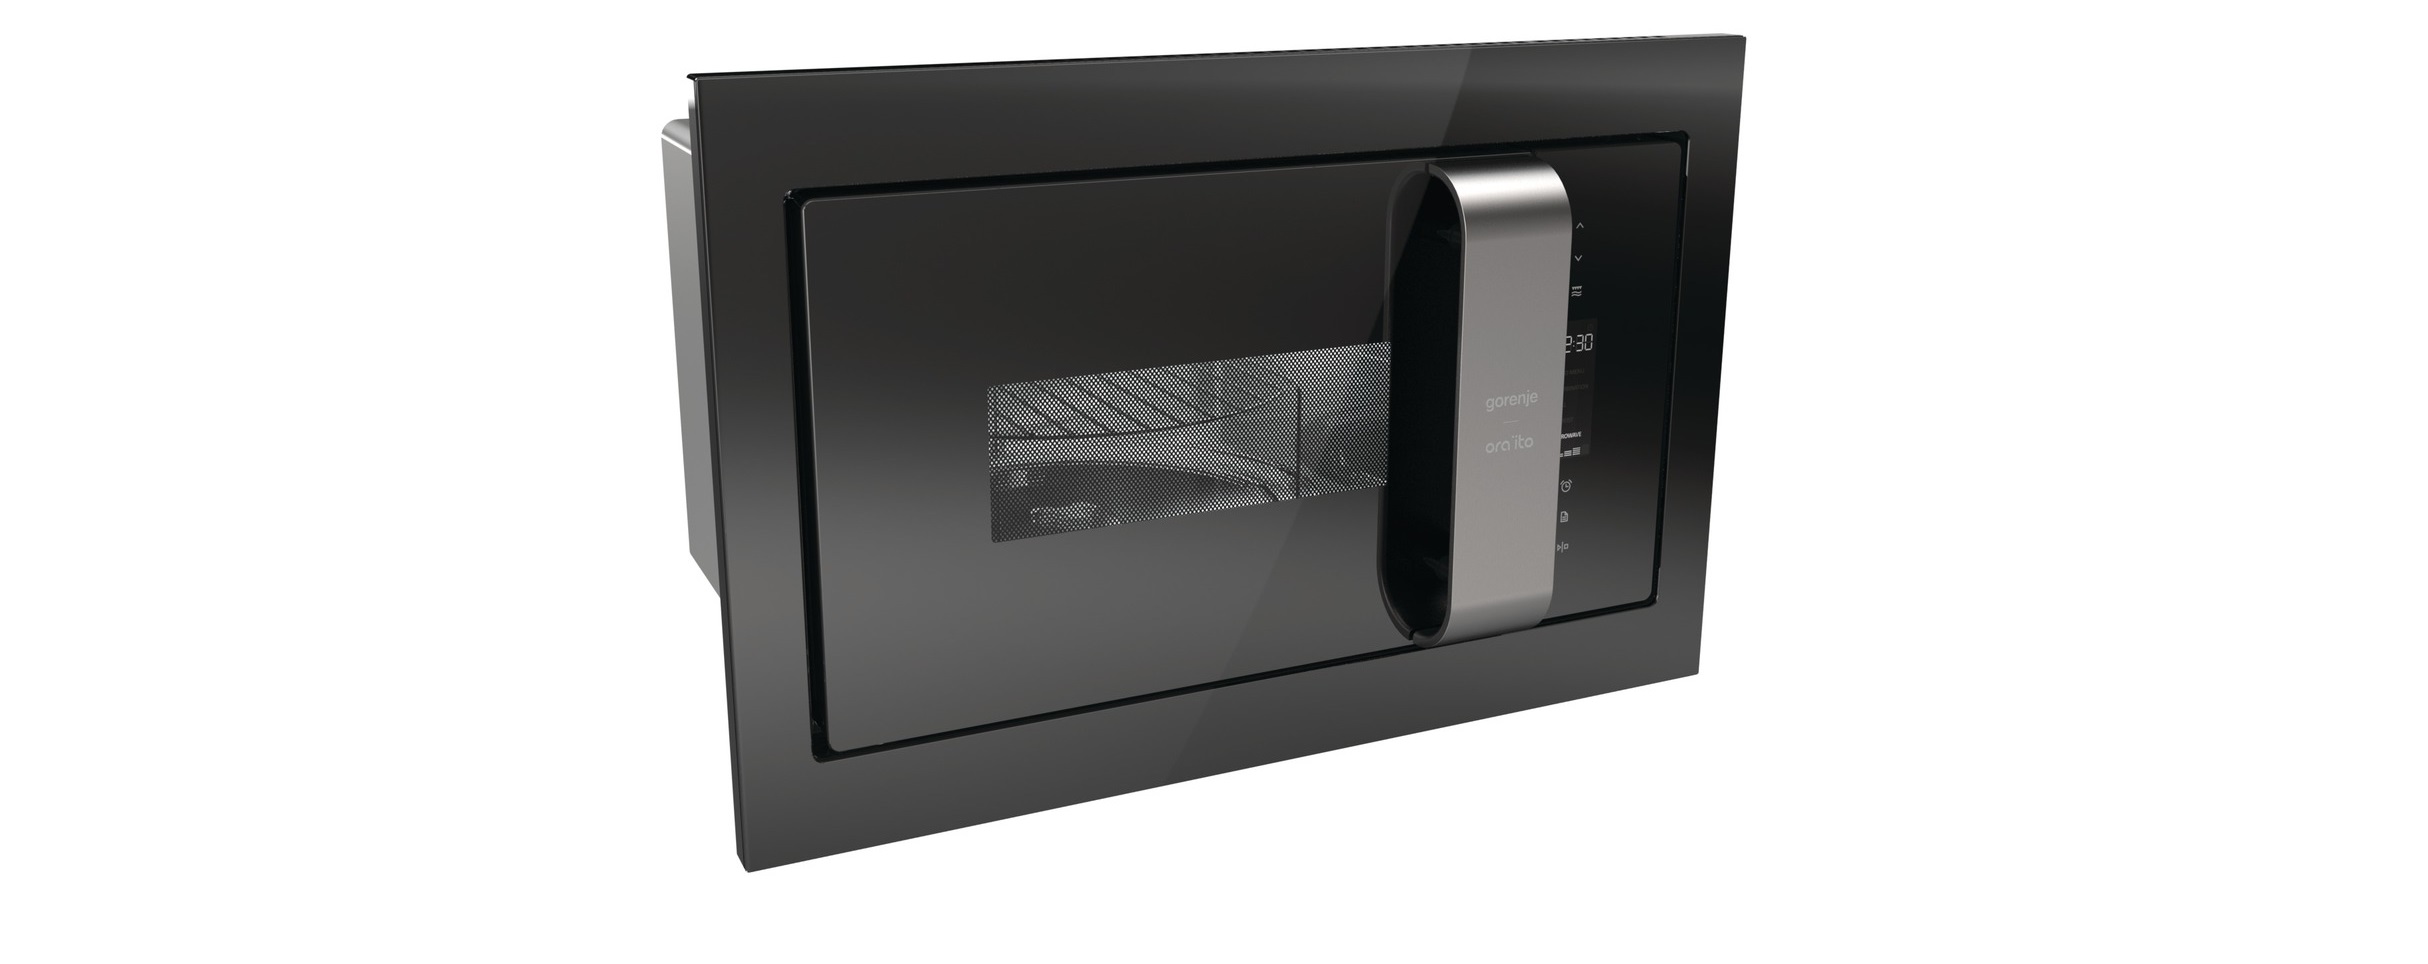 With BM235ORAB cm, Digital - Electric Grill, Gorenje 23 60 Liters, Built-In Black Microwave